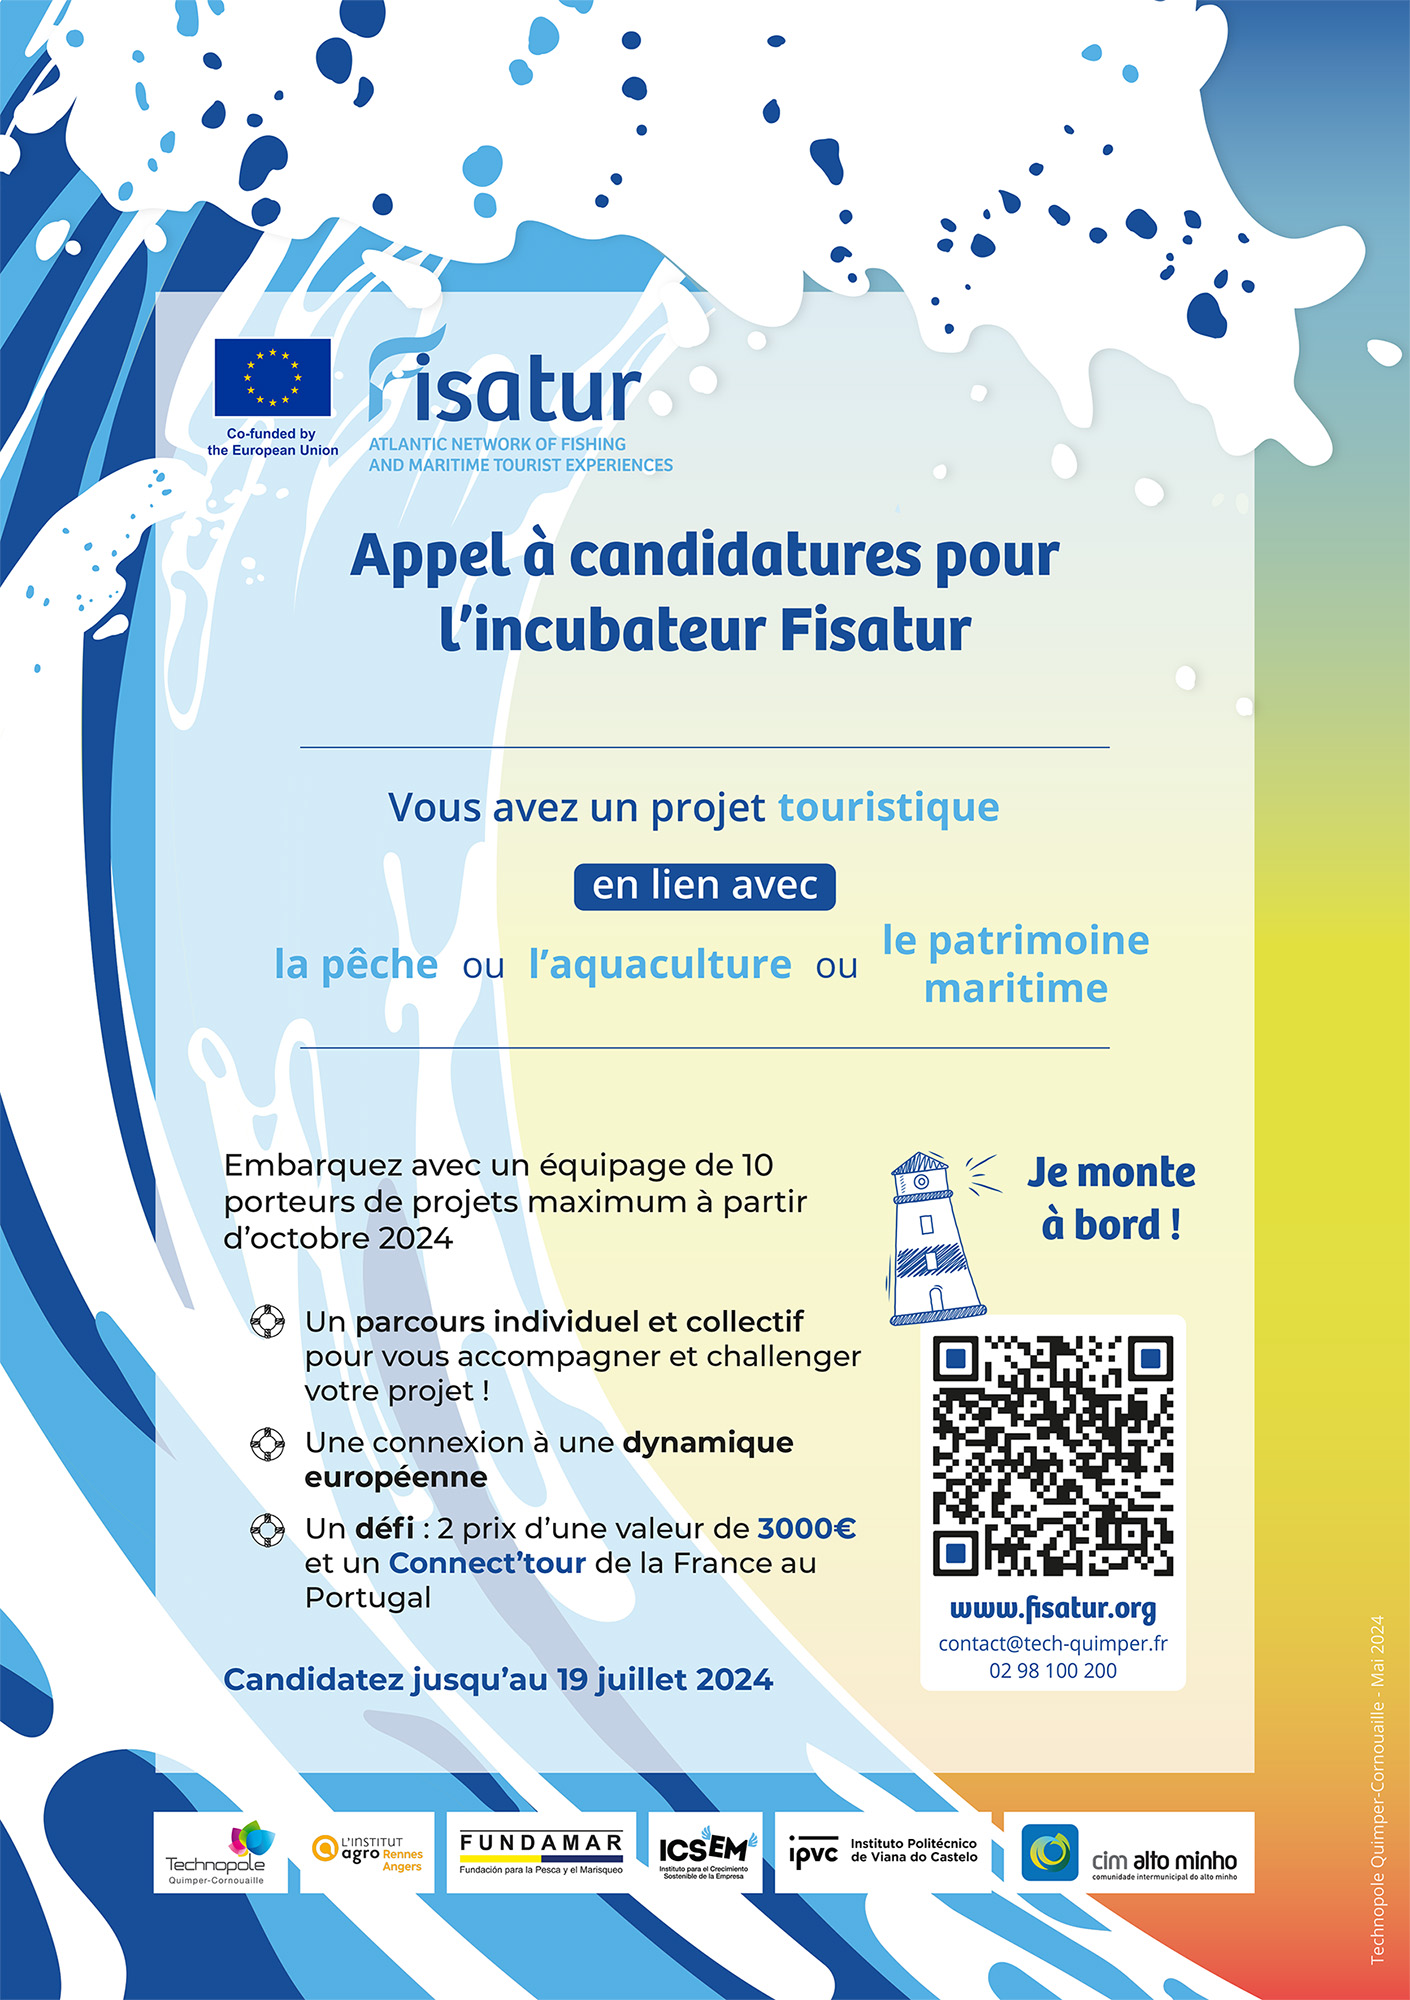 http://www.cap-sizun.fr/bibliotheque/Appel_candidature_incubateur_Fisatur.jpg